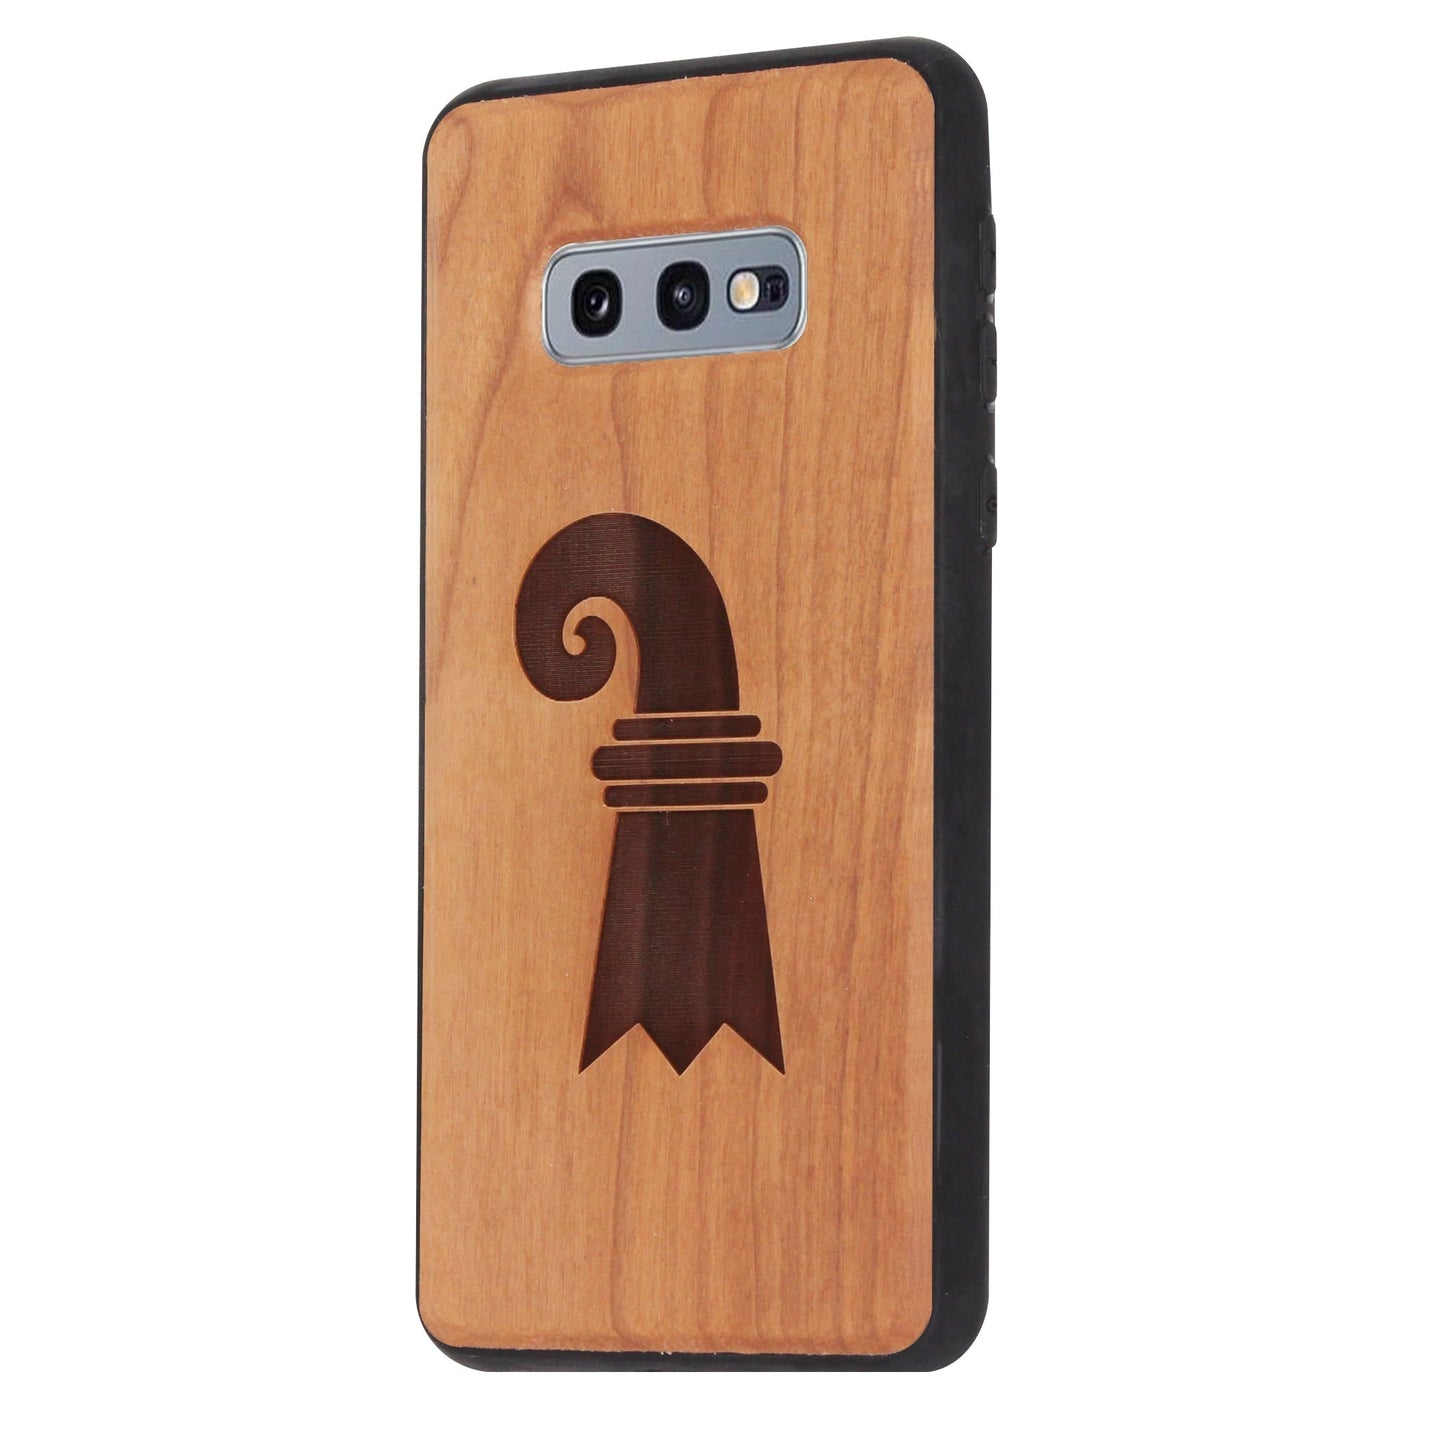 Baslerstab Eden case made of cherry wood for Samsung Galaxy S10E